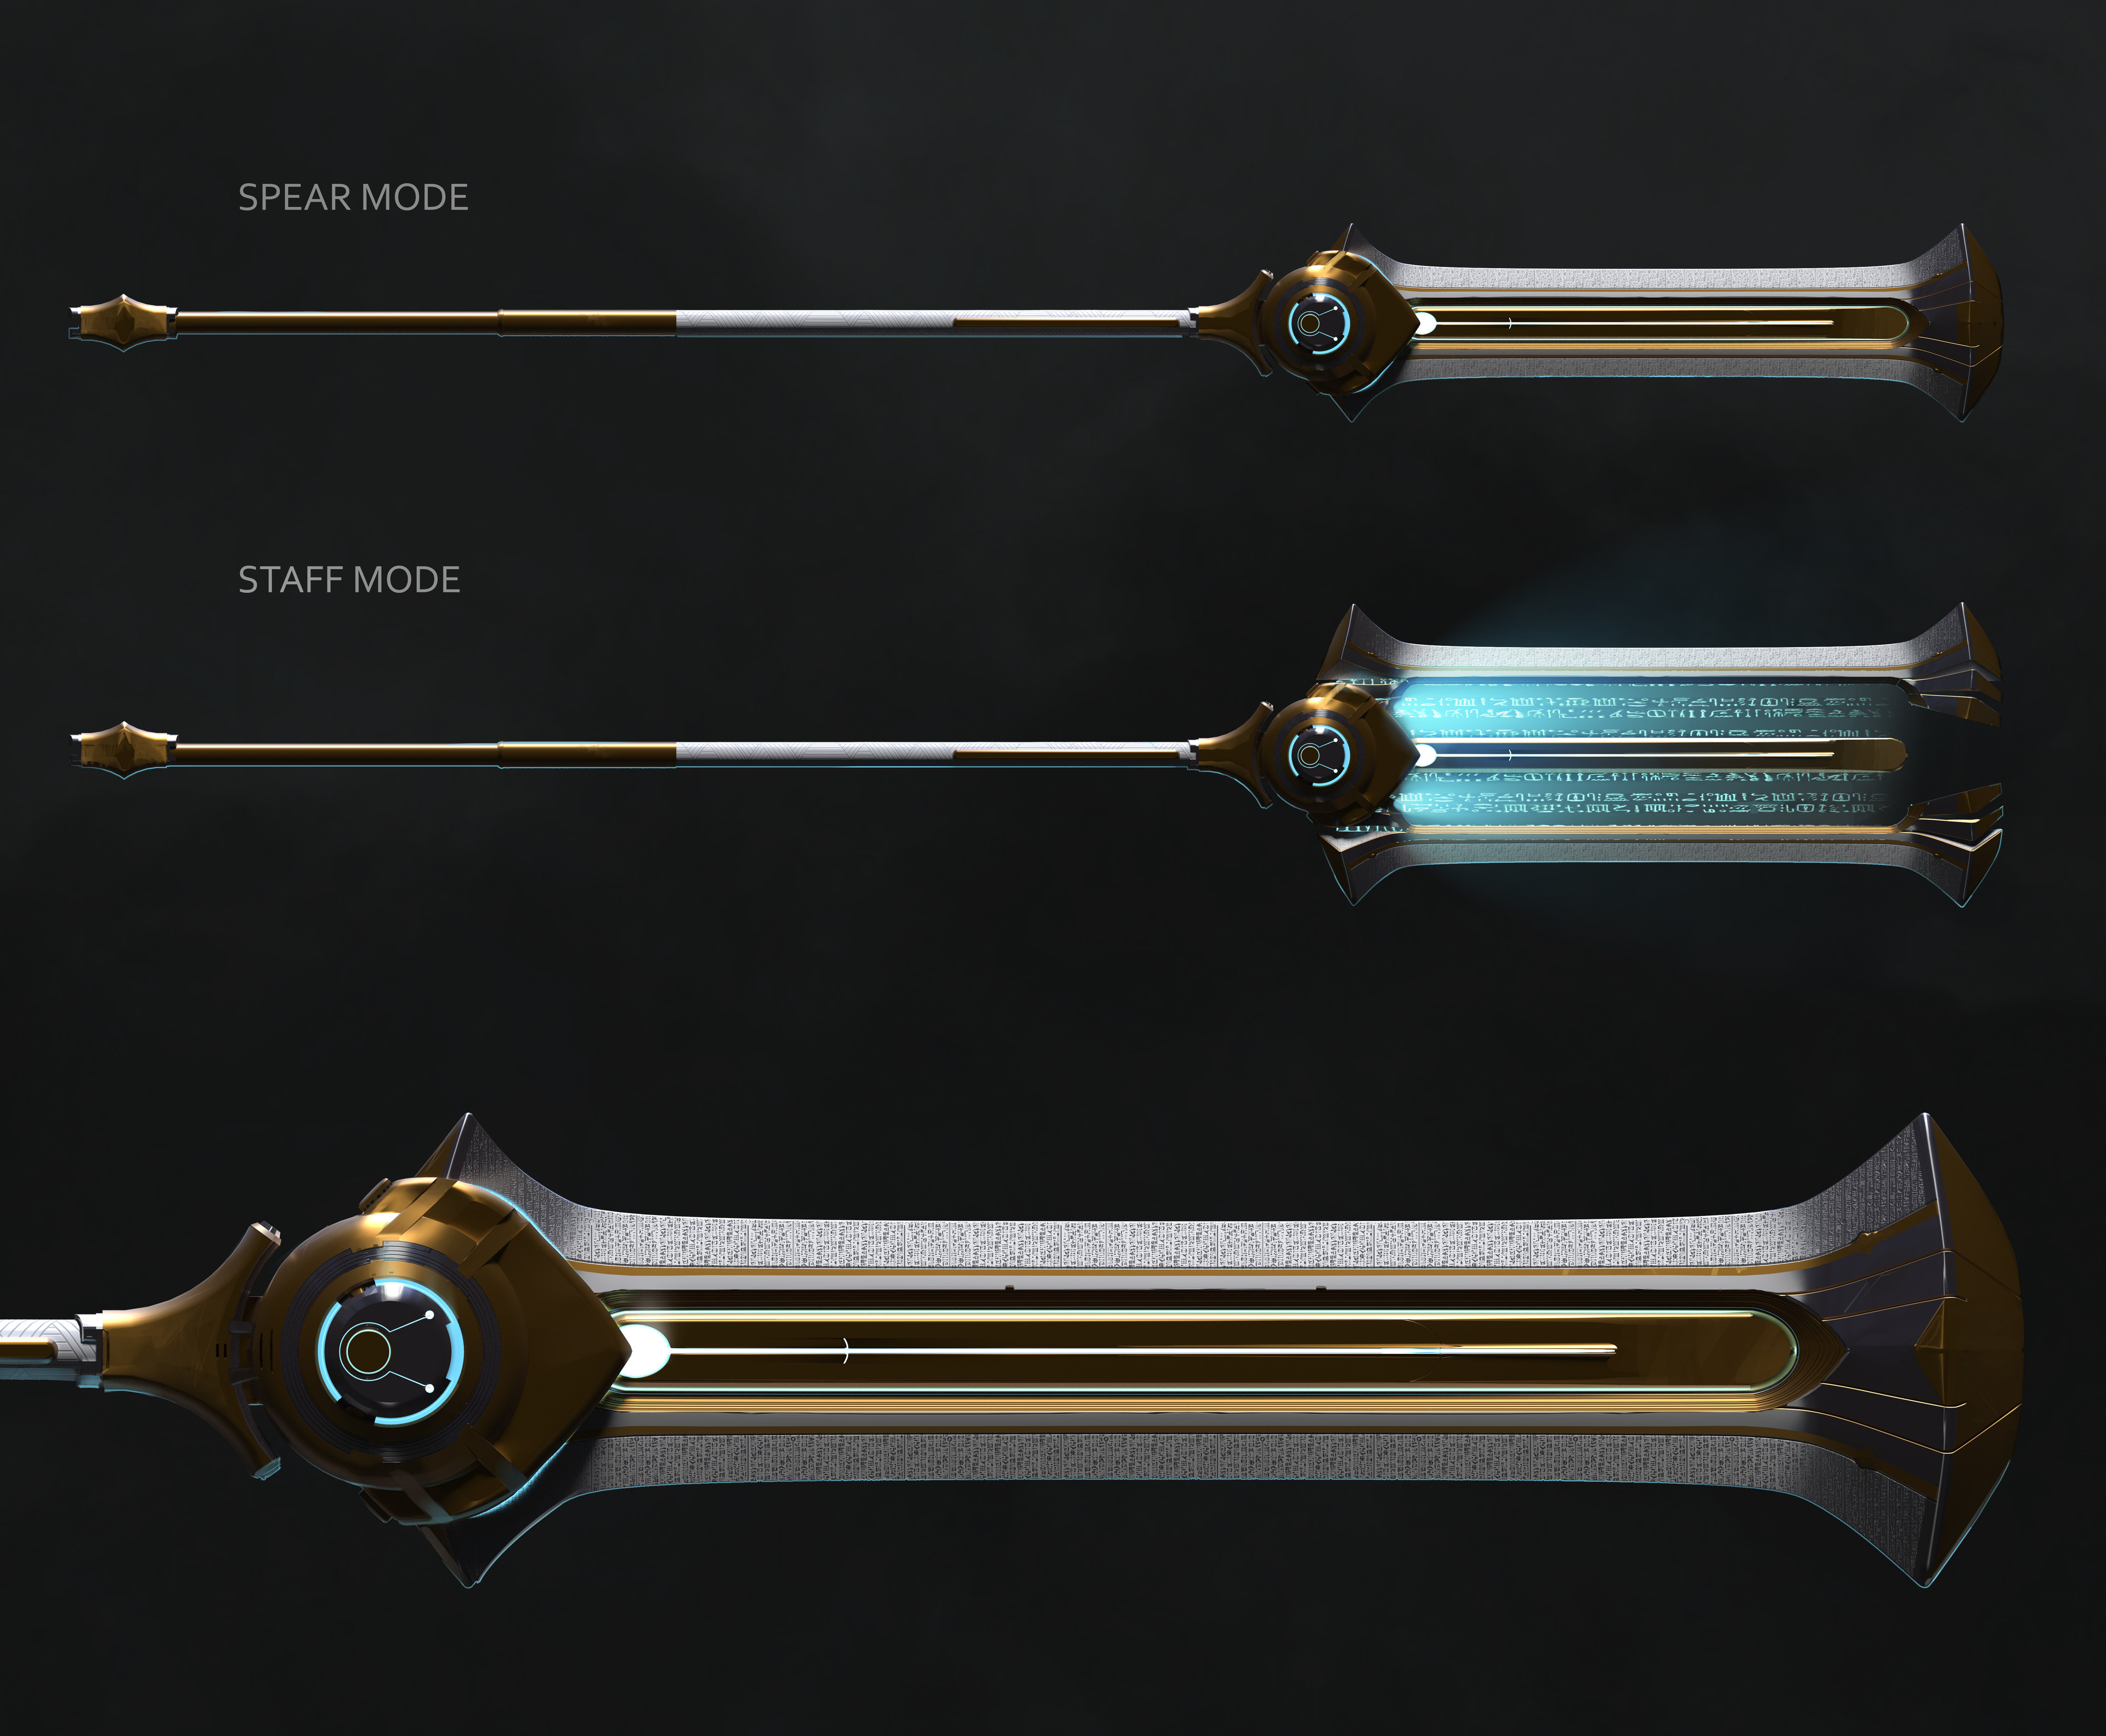 Spear details